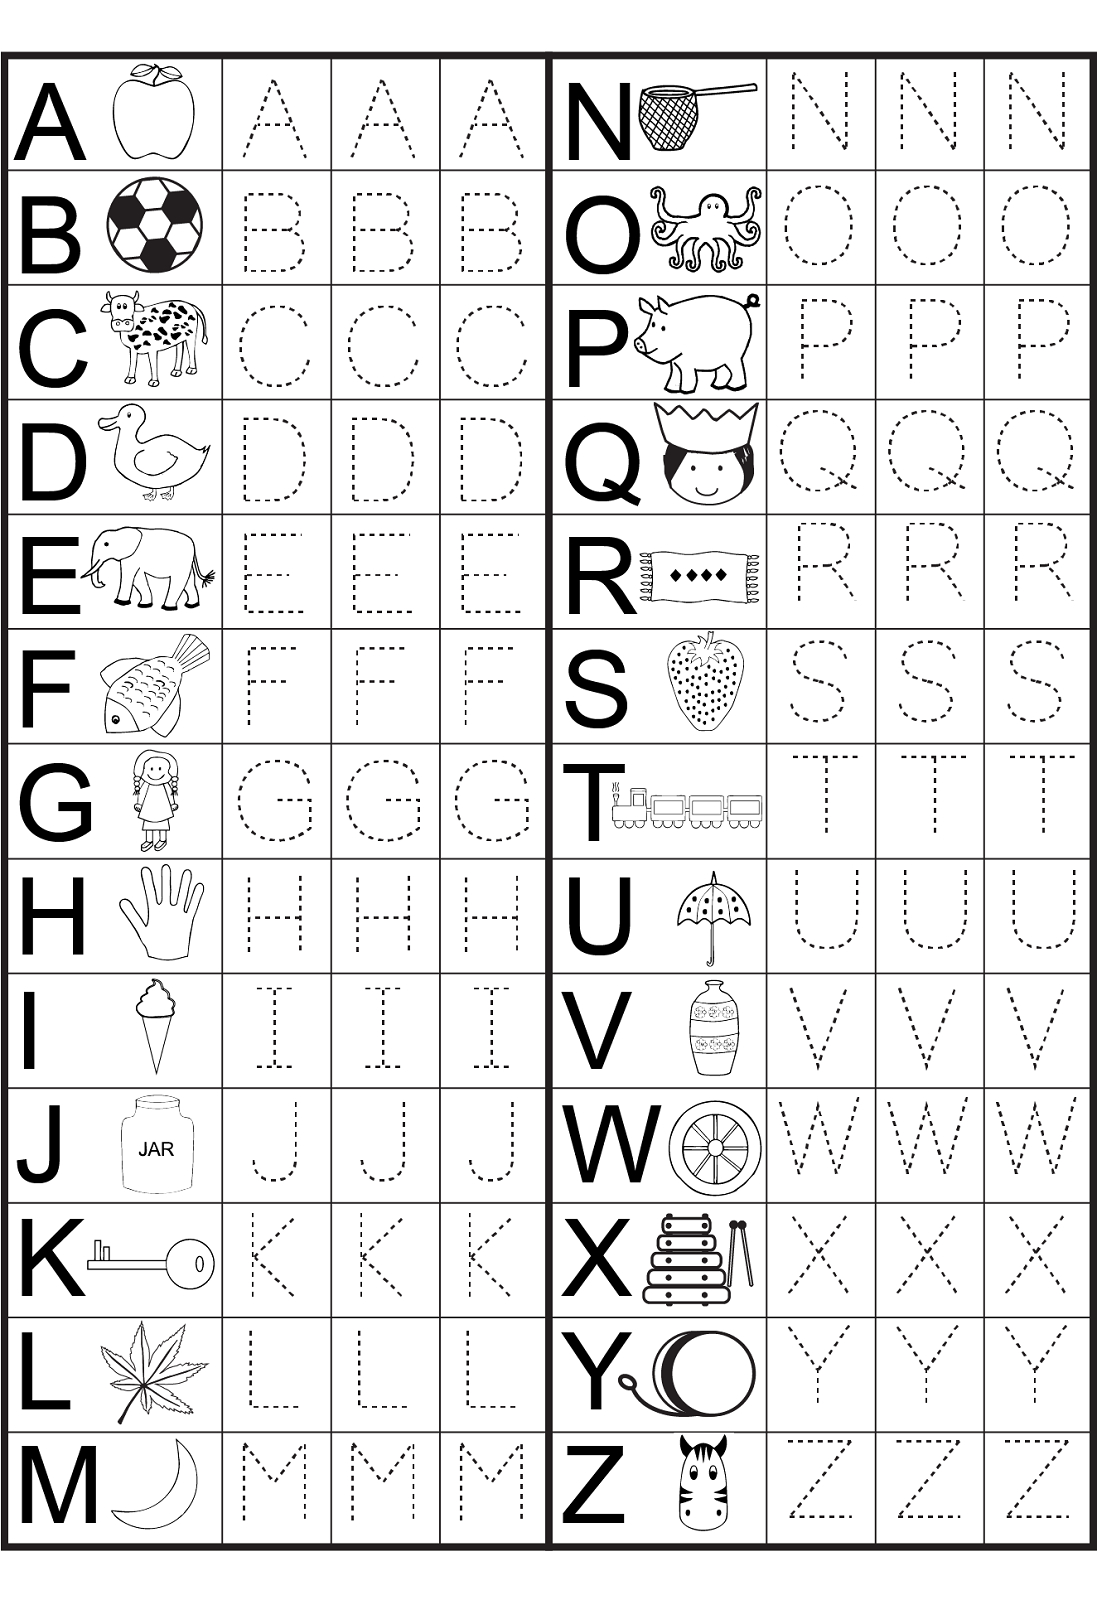 Kindergarten Alphabet Worksheets To Print | Preschool throughout Alphabet Tracing Worksheets For 5 Year Olds